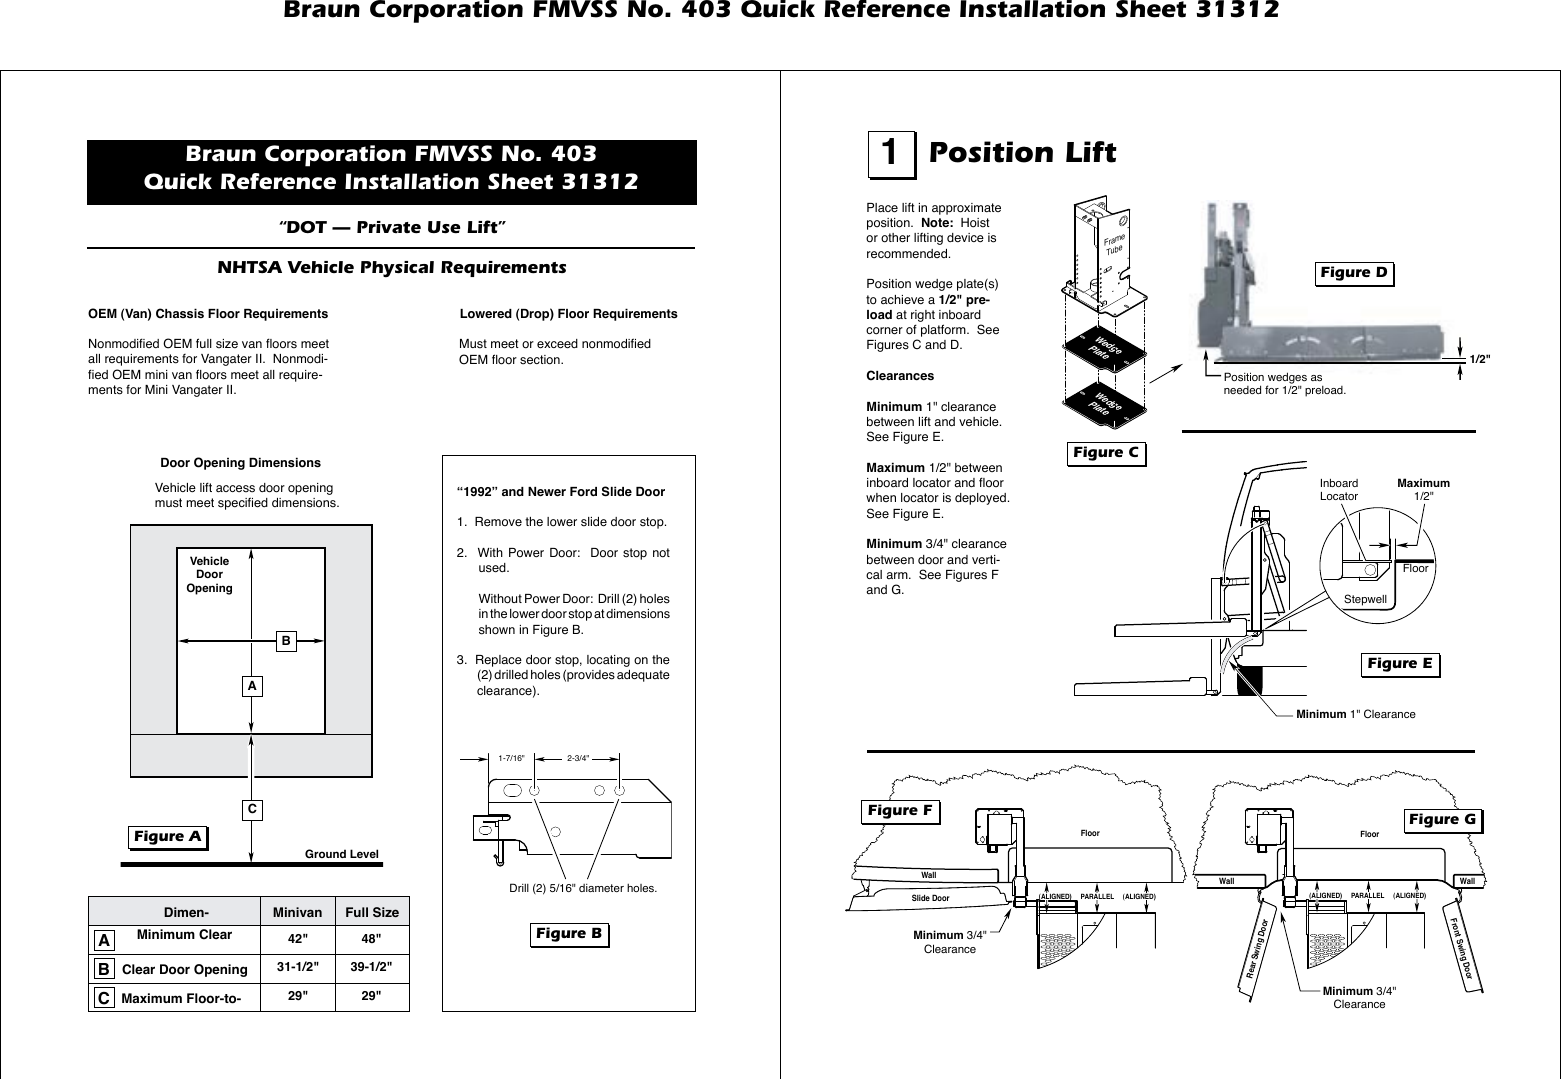 Page 1 of 8 - Braun Braun-Corporation-Fmvss-No-403-403-Users-Manual-  Braun-corporation-fmvss-no-403-403-users-manual